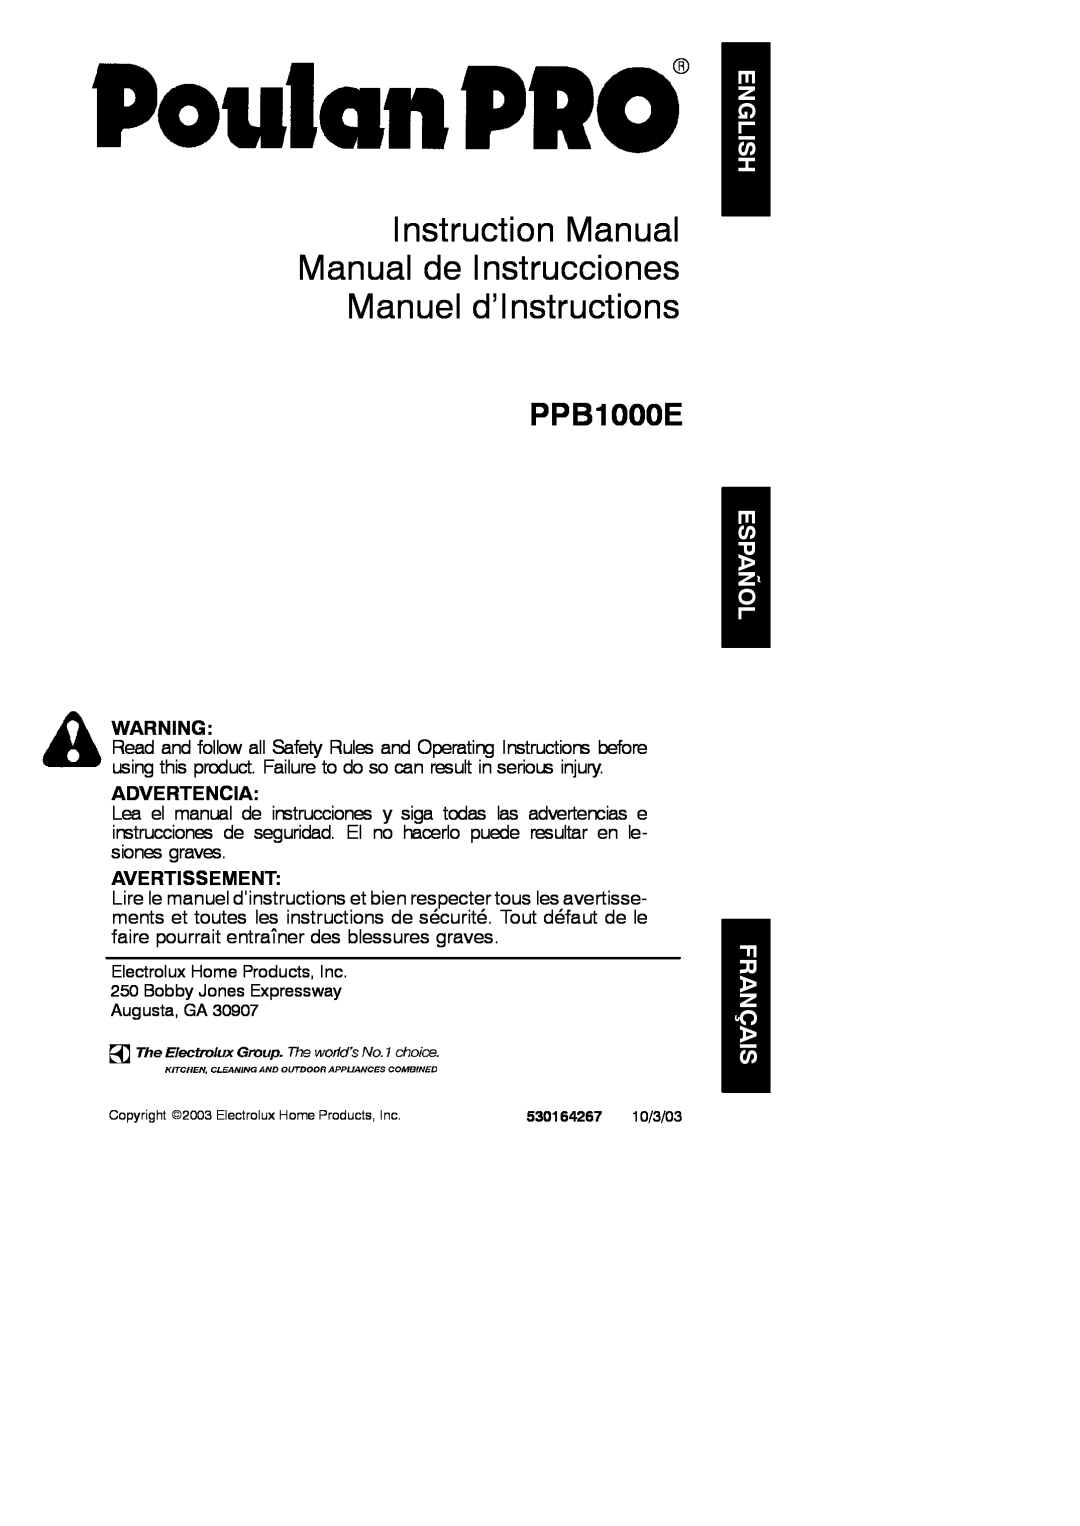 Poulan PPB1000E instruction manual English, Español, Français, Advertencia, Avertissement 